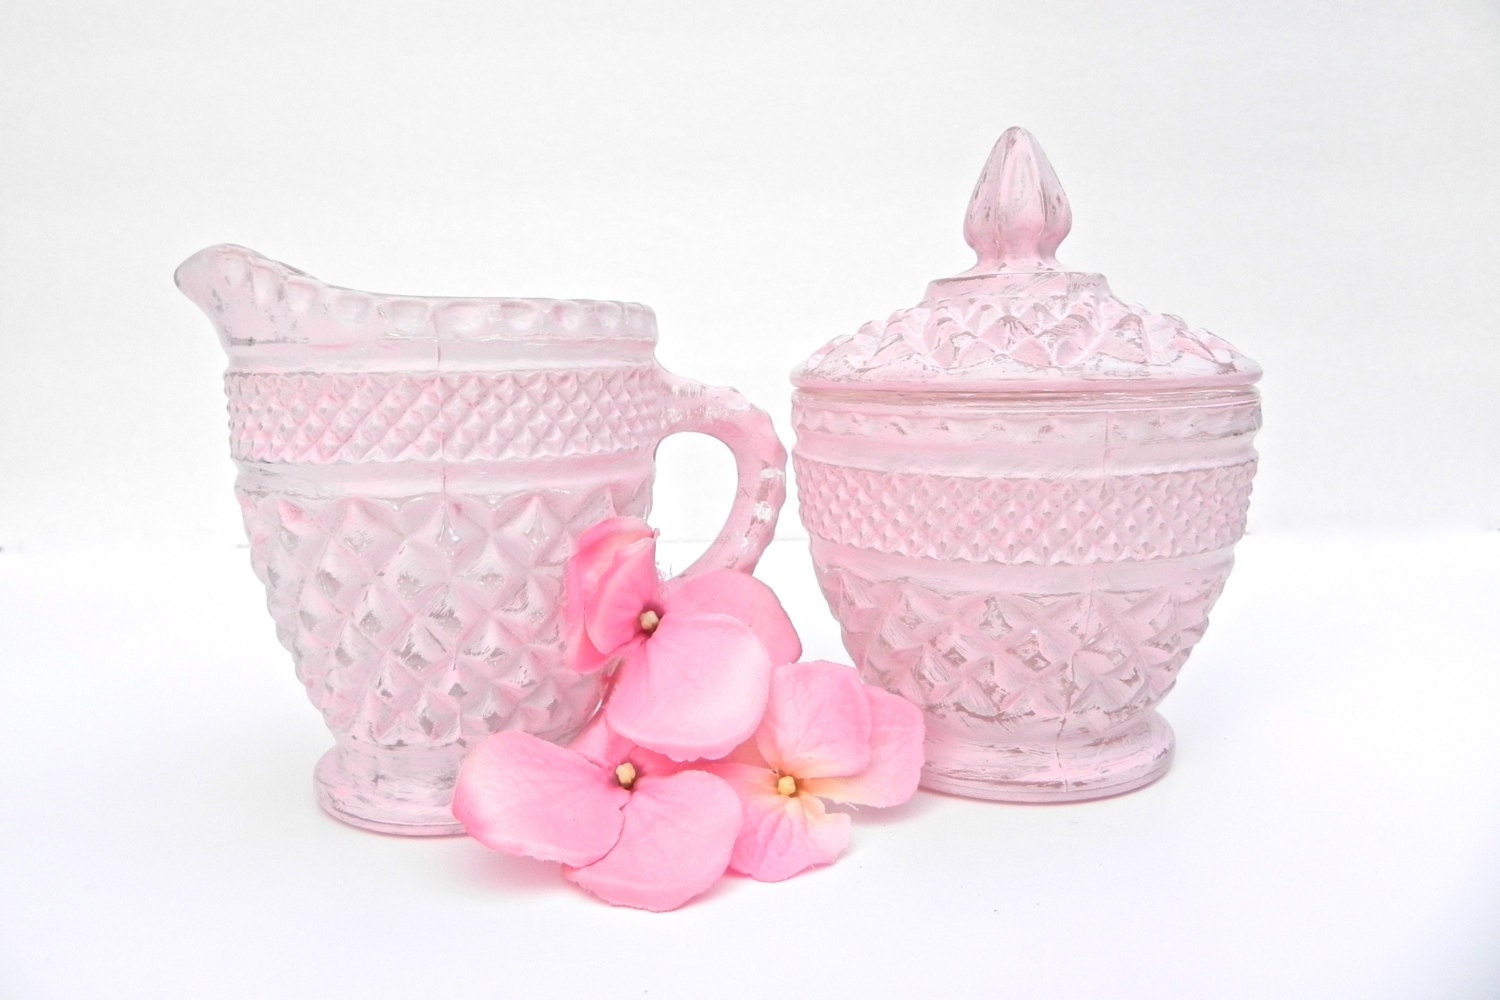 Shabby Chic Pink Sugar and Creamer Set, Glass Painted Sugar Creamer Set - GlassCastle2